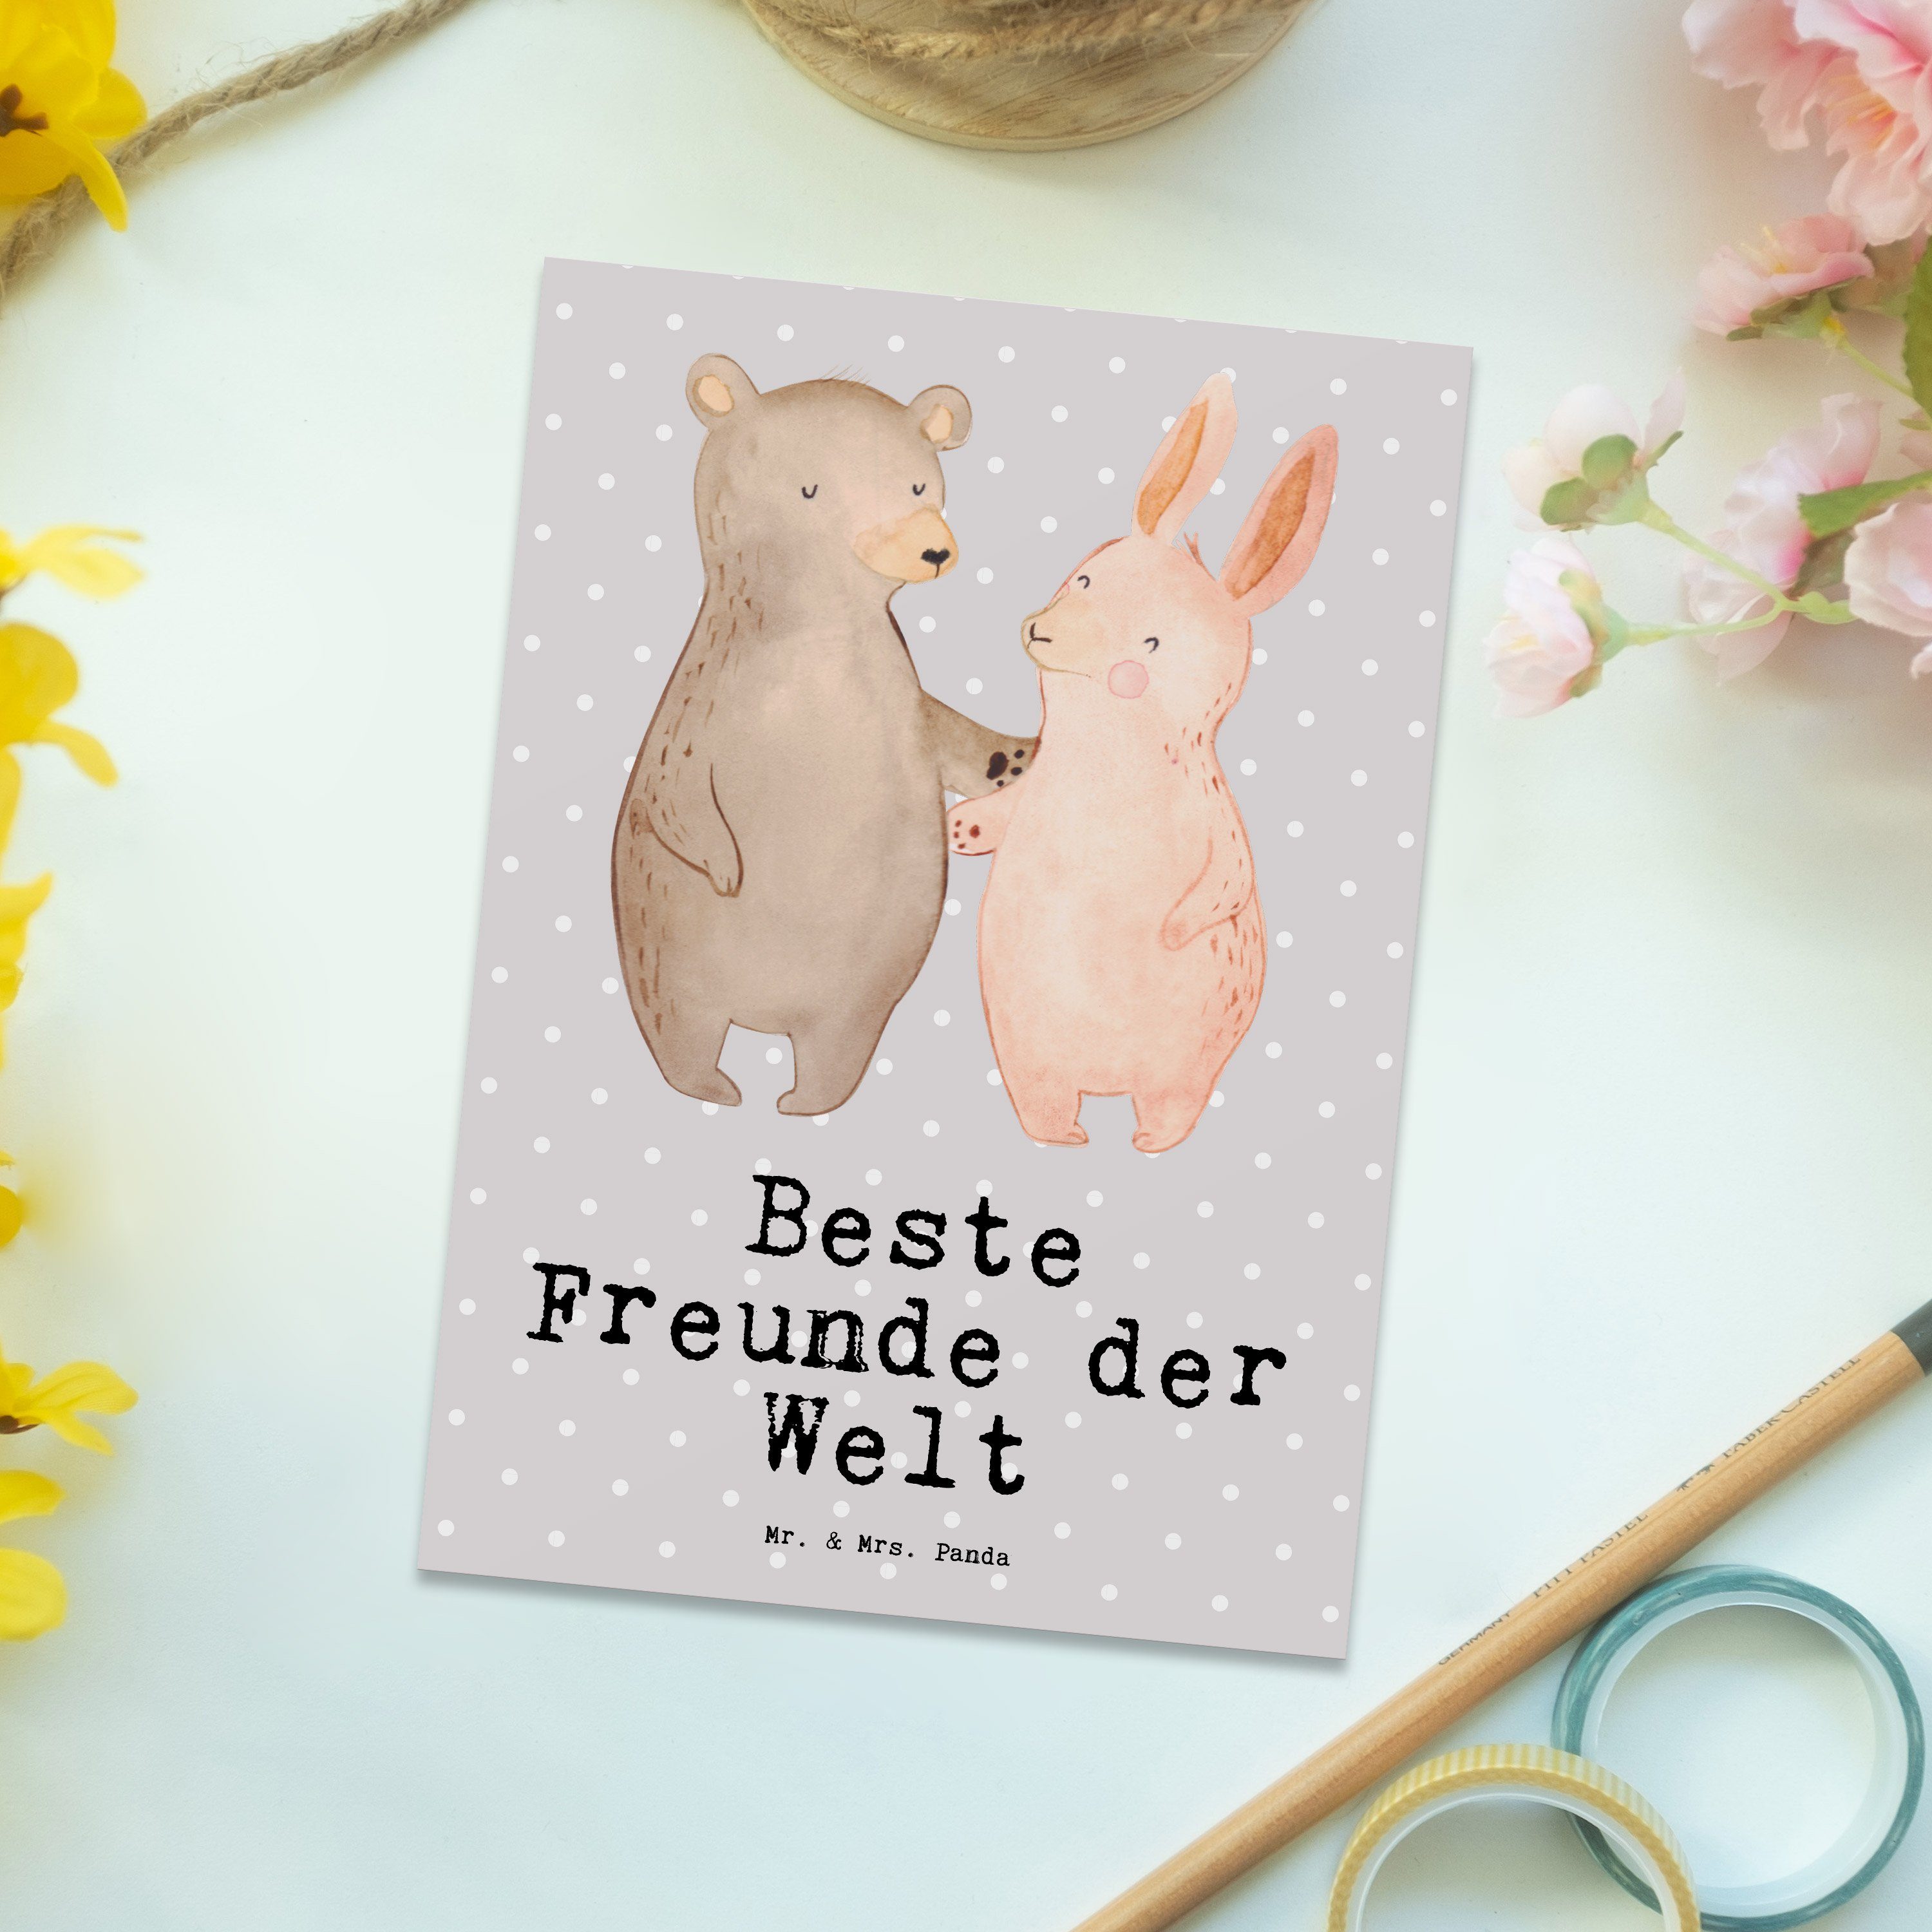 Grau Panda Beste Geschenk, - Mr. Freunde Welt der best Mrs. & Pastell Hase - Postkarte friends